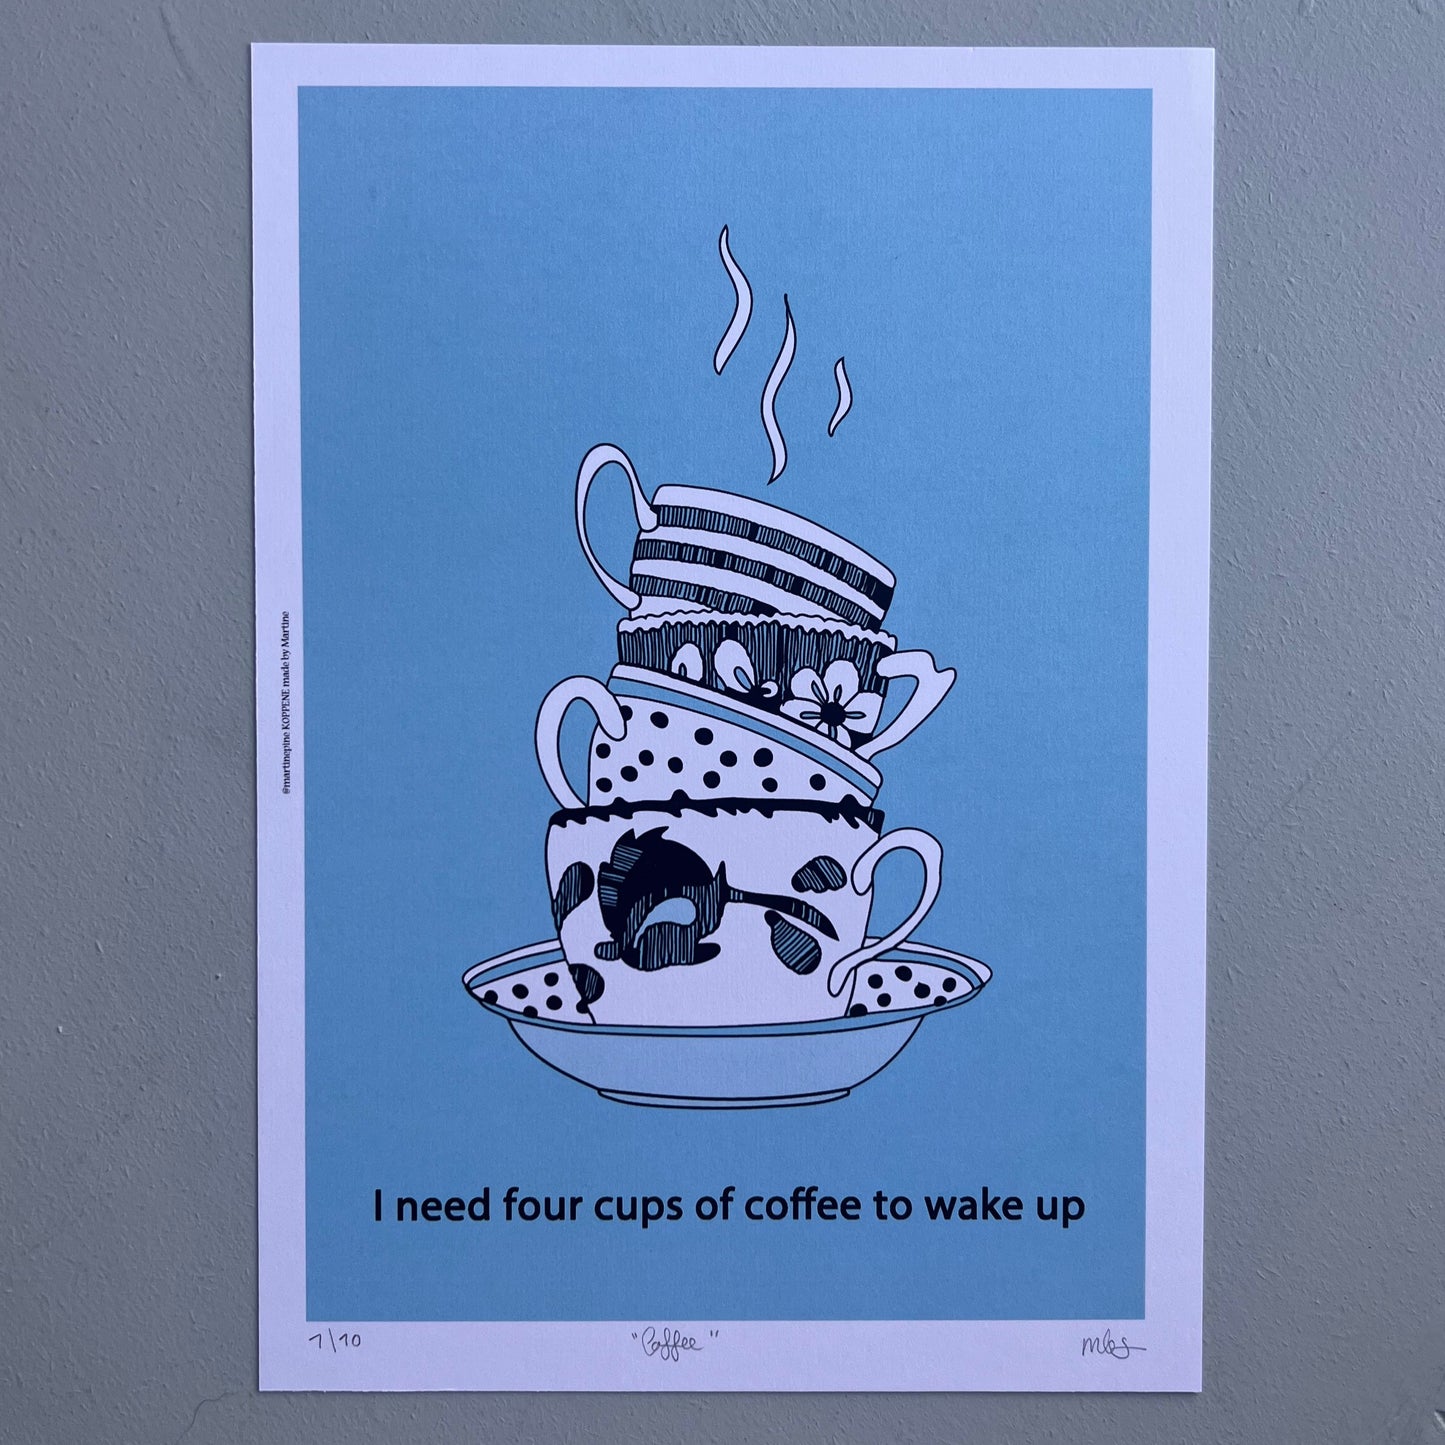 "I need four cups of coffee to wake up" av martinepine